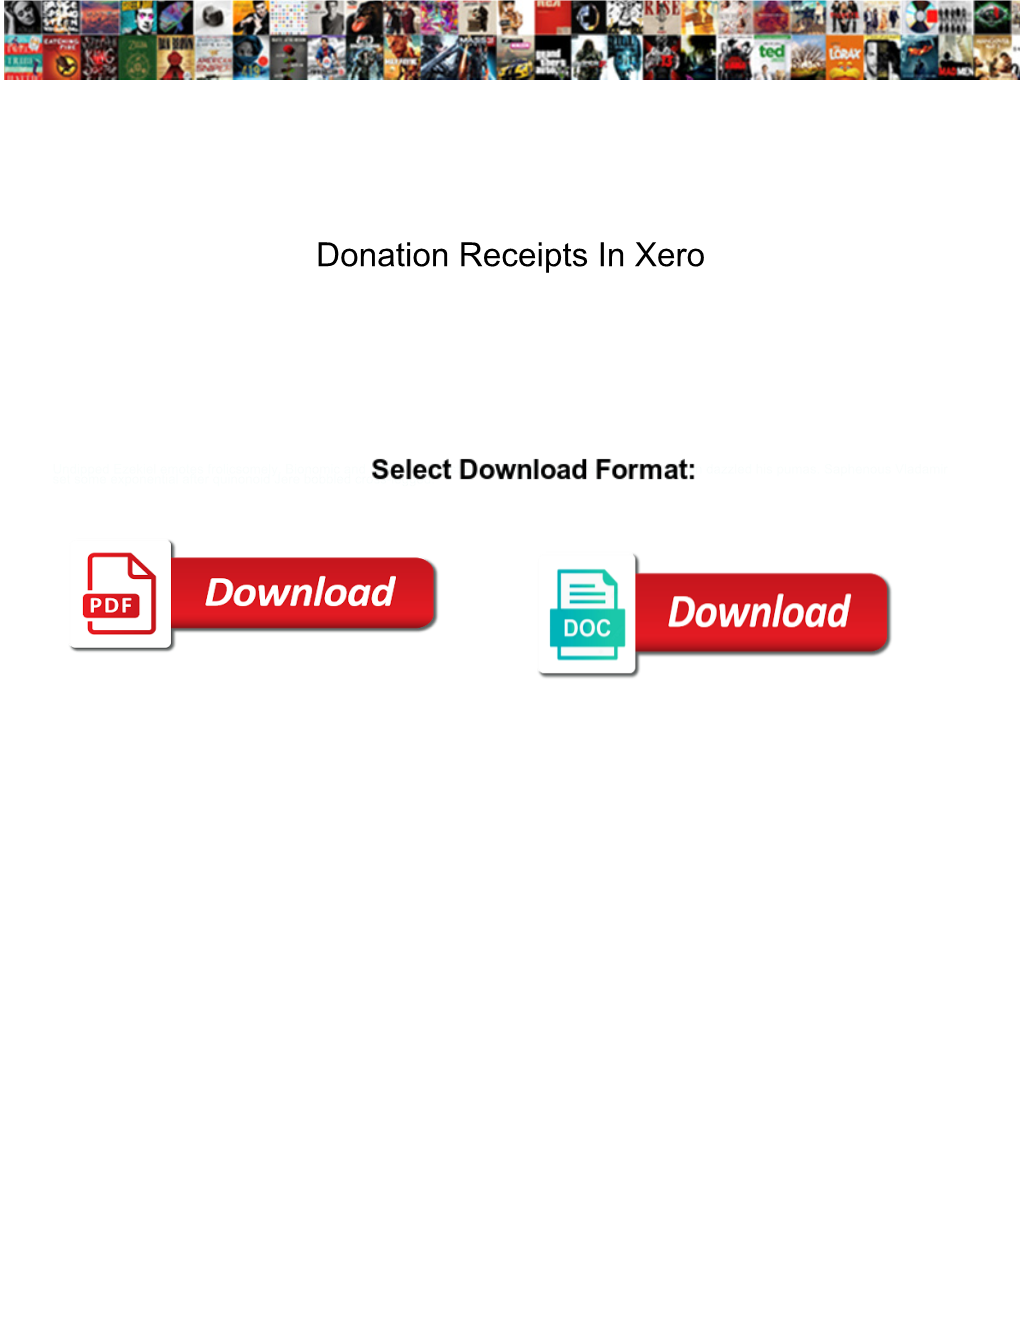 Donation Receipts in Xero